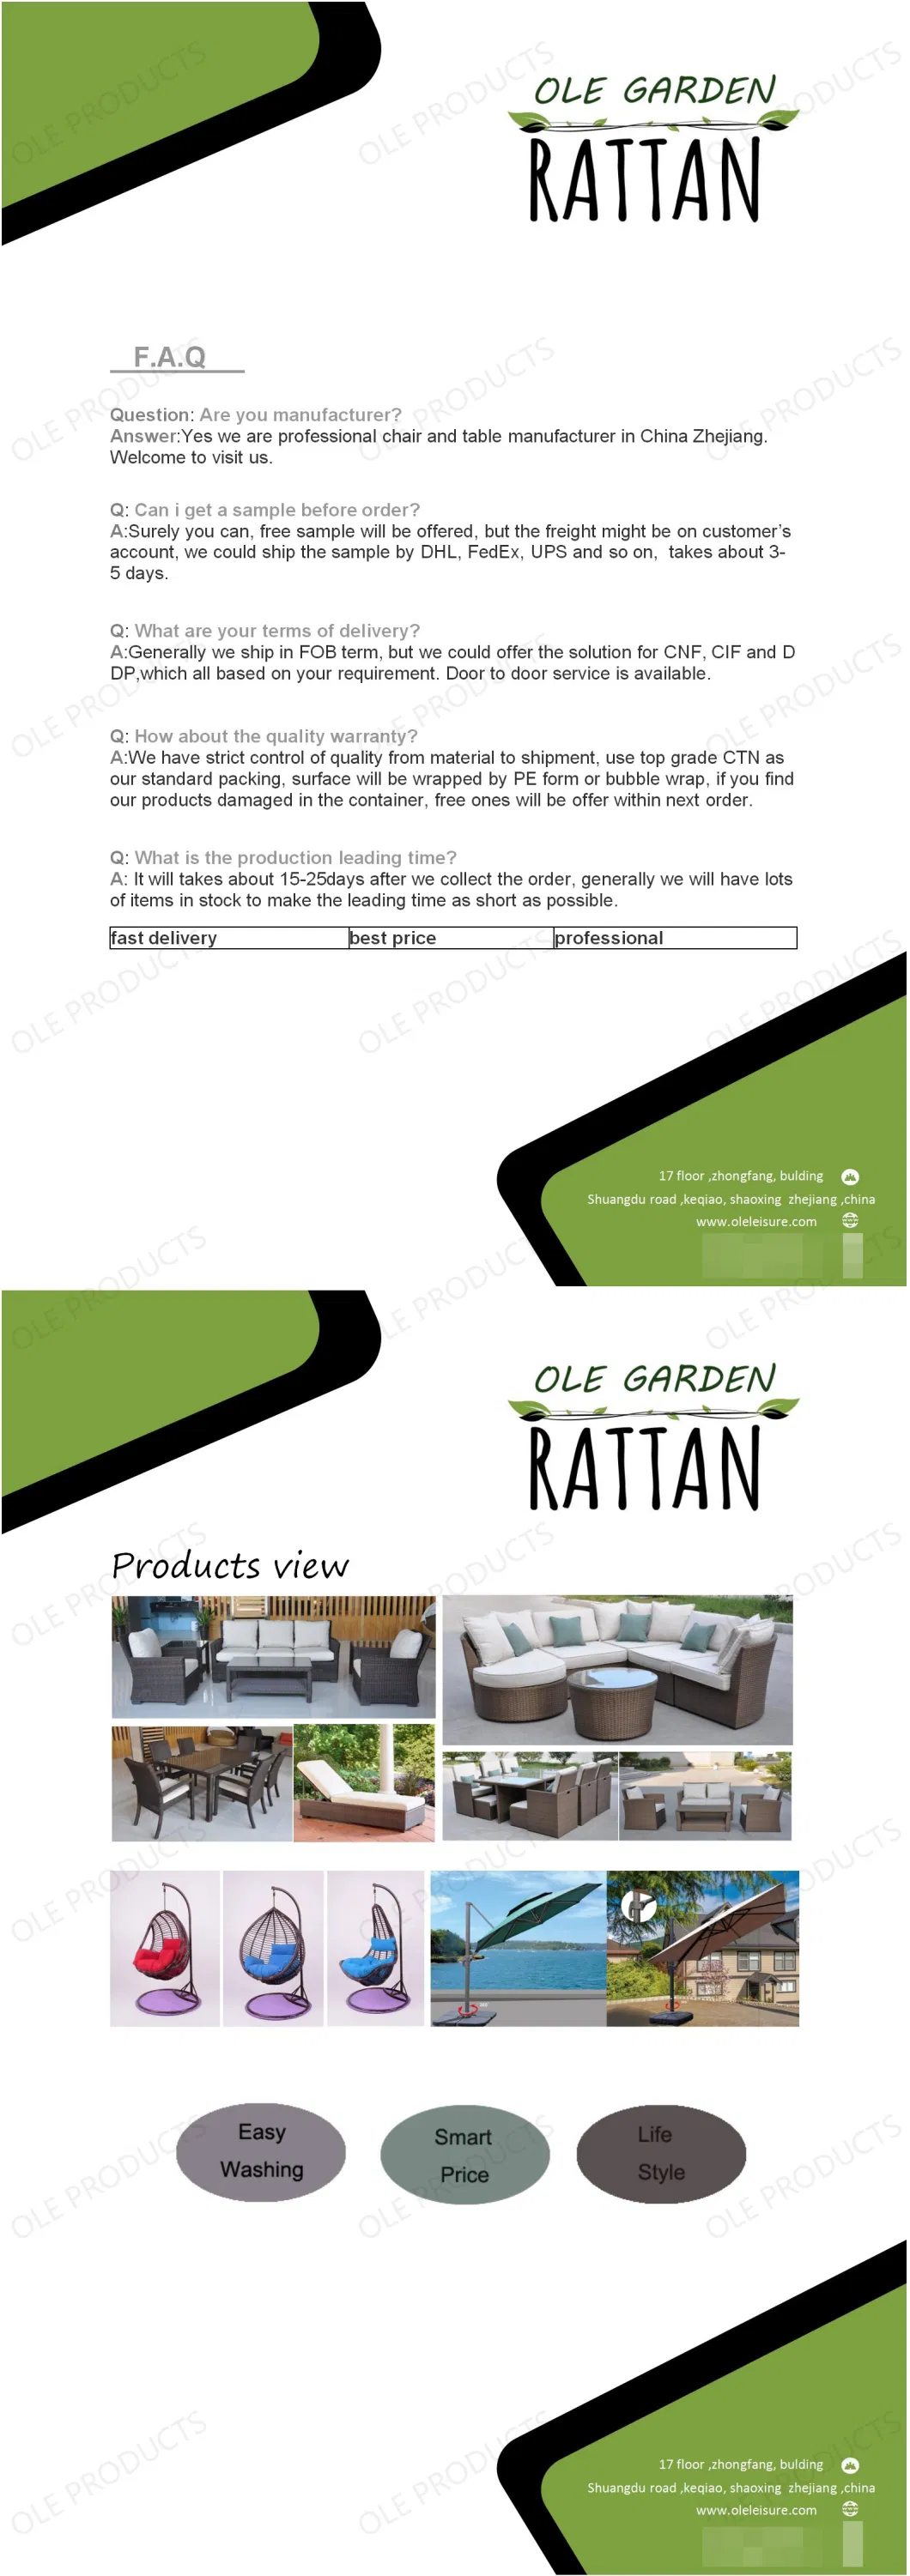 5 PCS Popular Outdoor Furniture Sofa Set Design Garden Leisure Rattan Sofa with Multiple Combinations